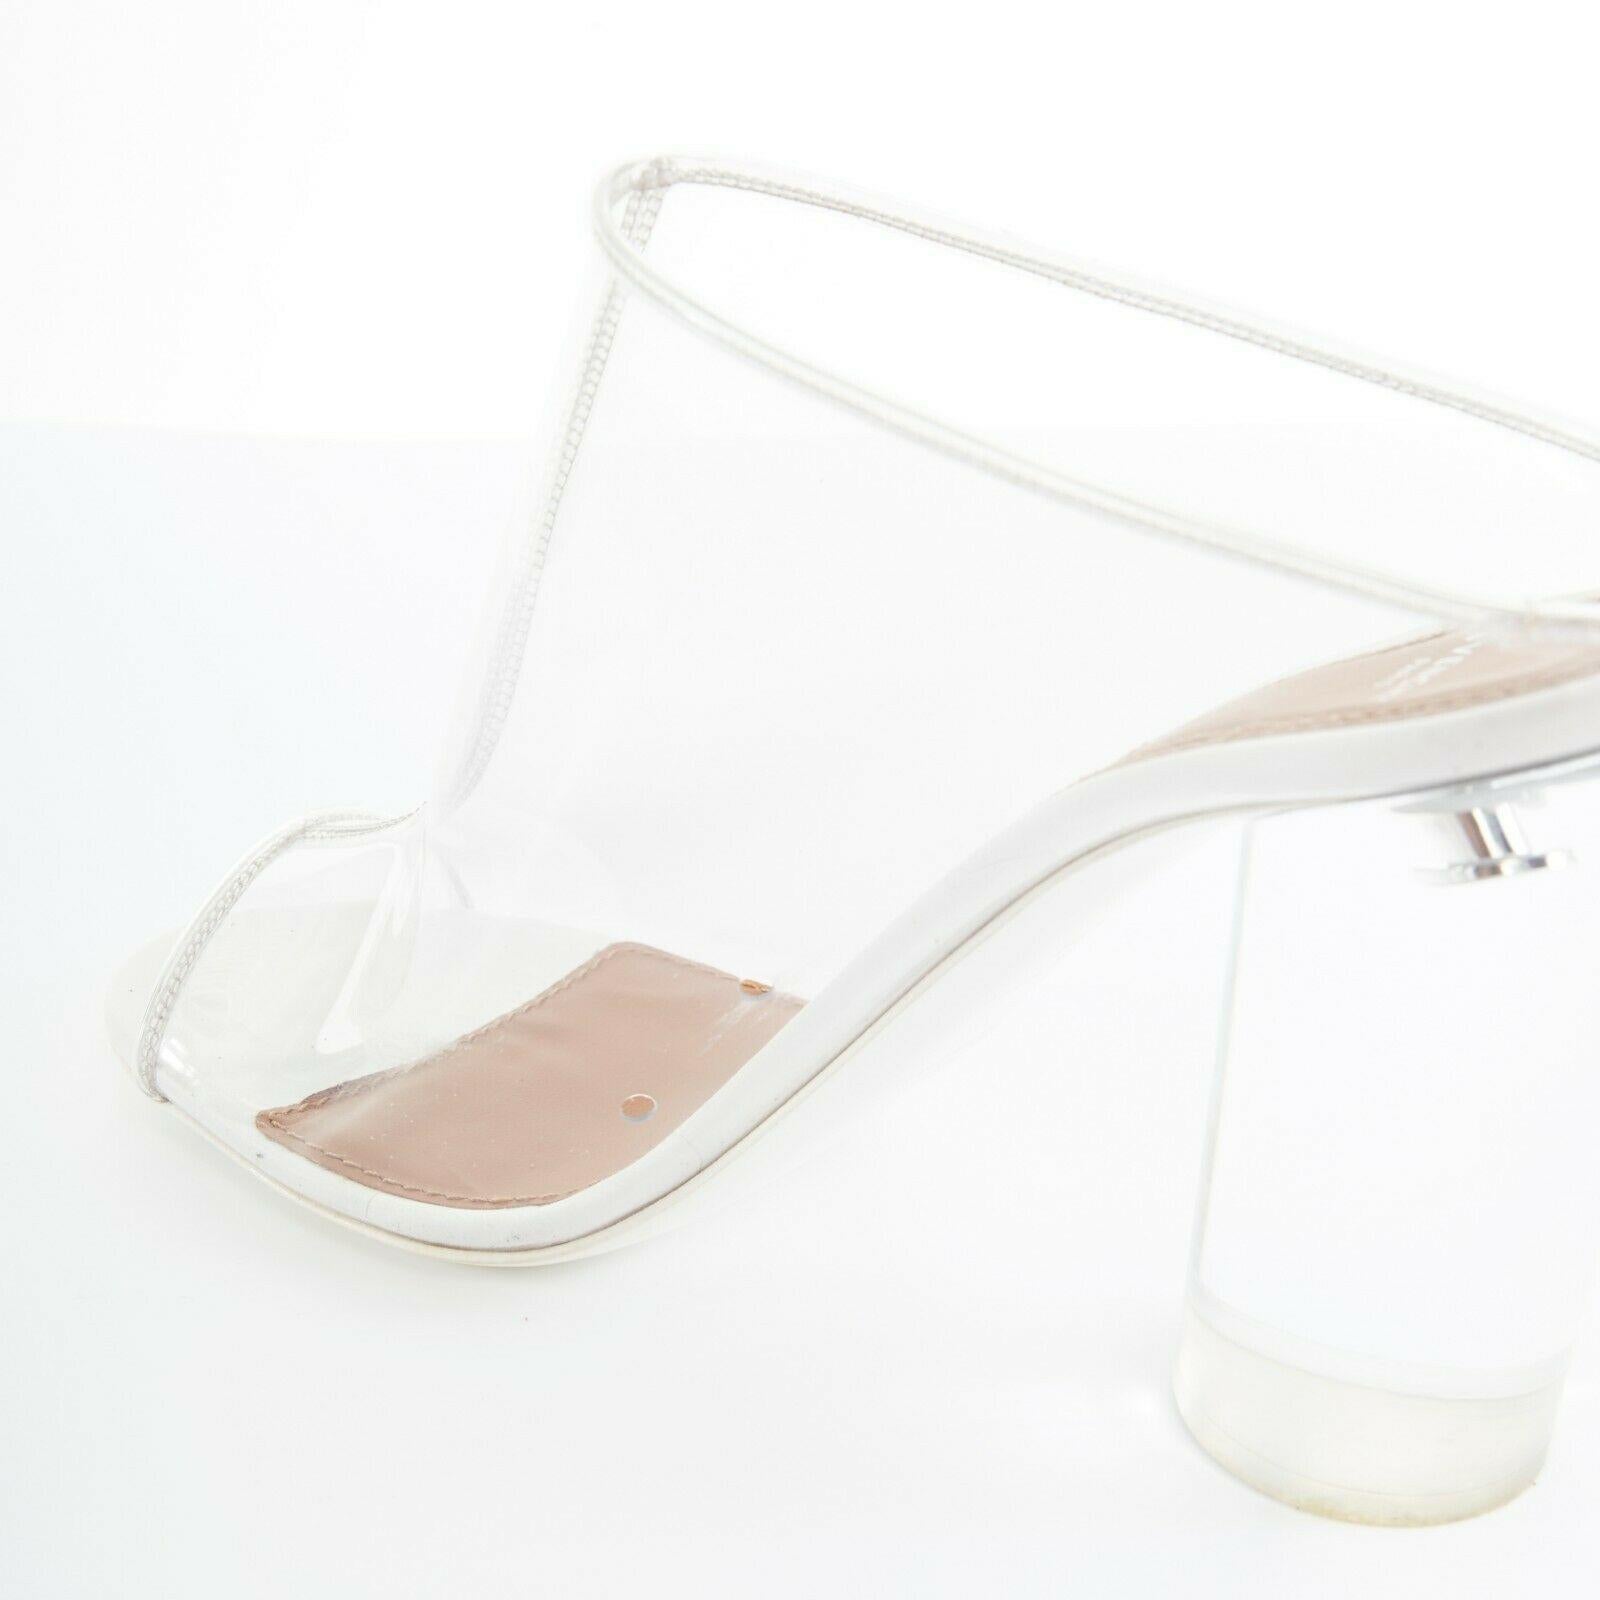 GIVENCHY TISCI white clear PVC perspex cylindrical heel peep toe mule heels EU38 3